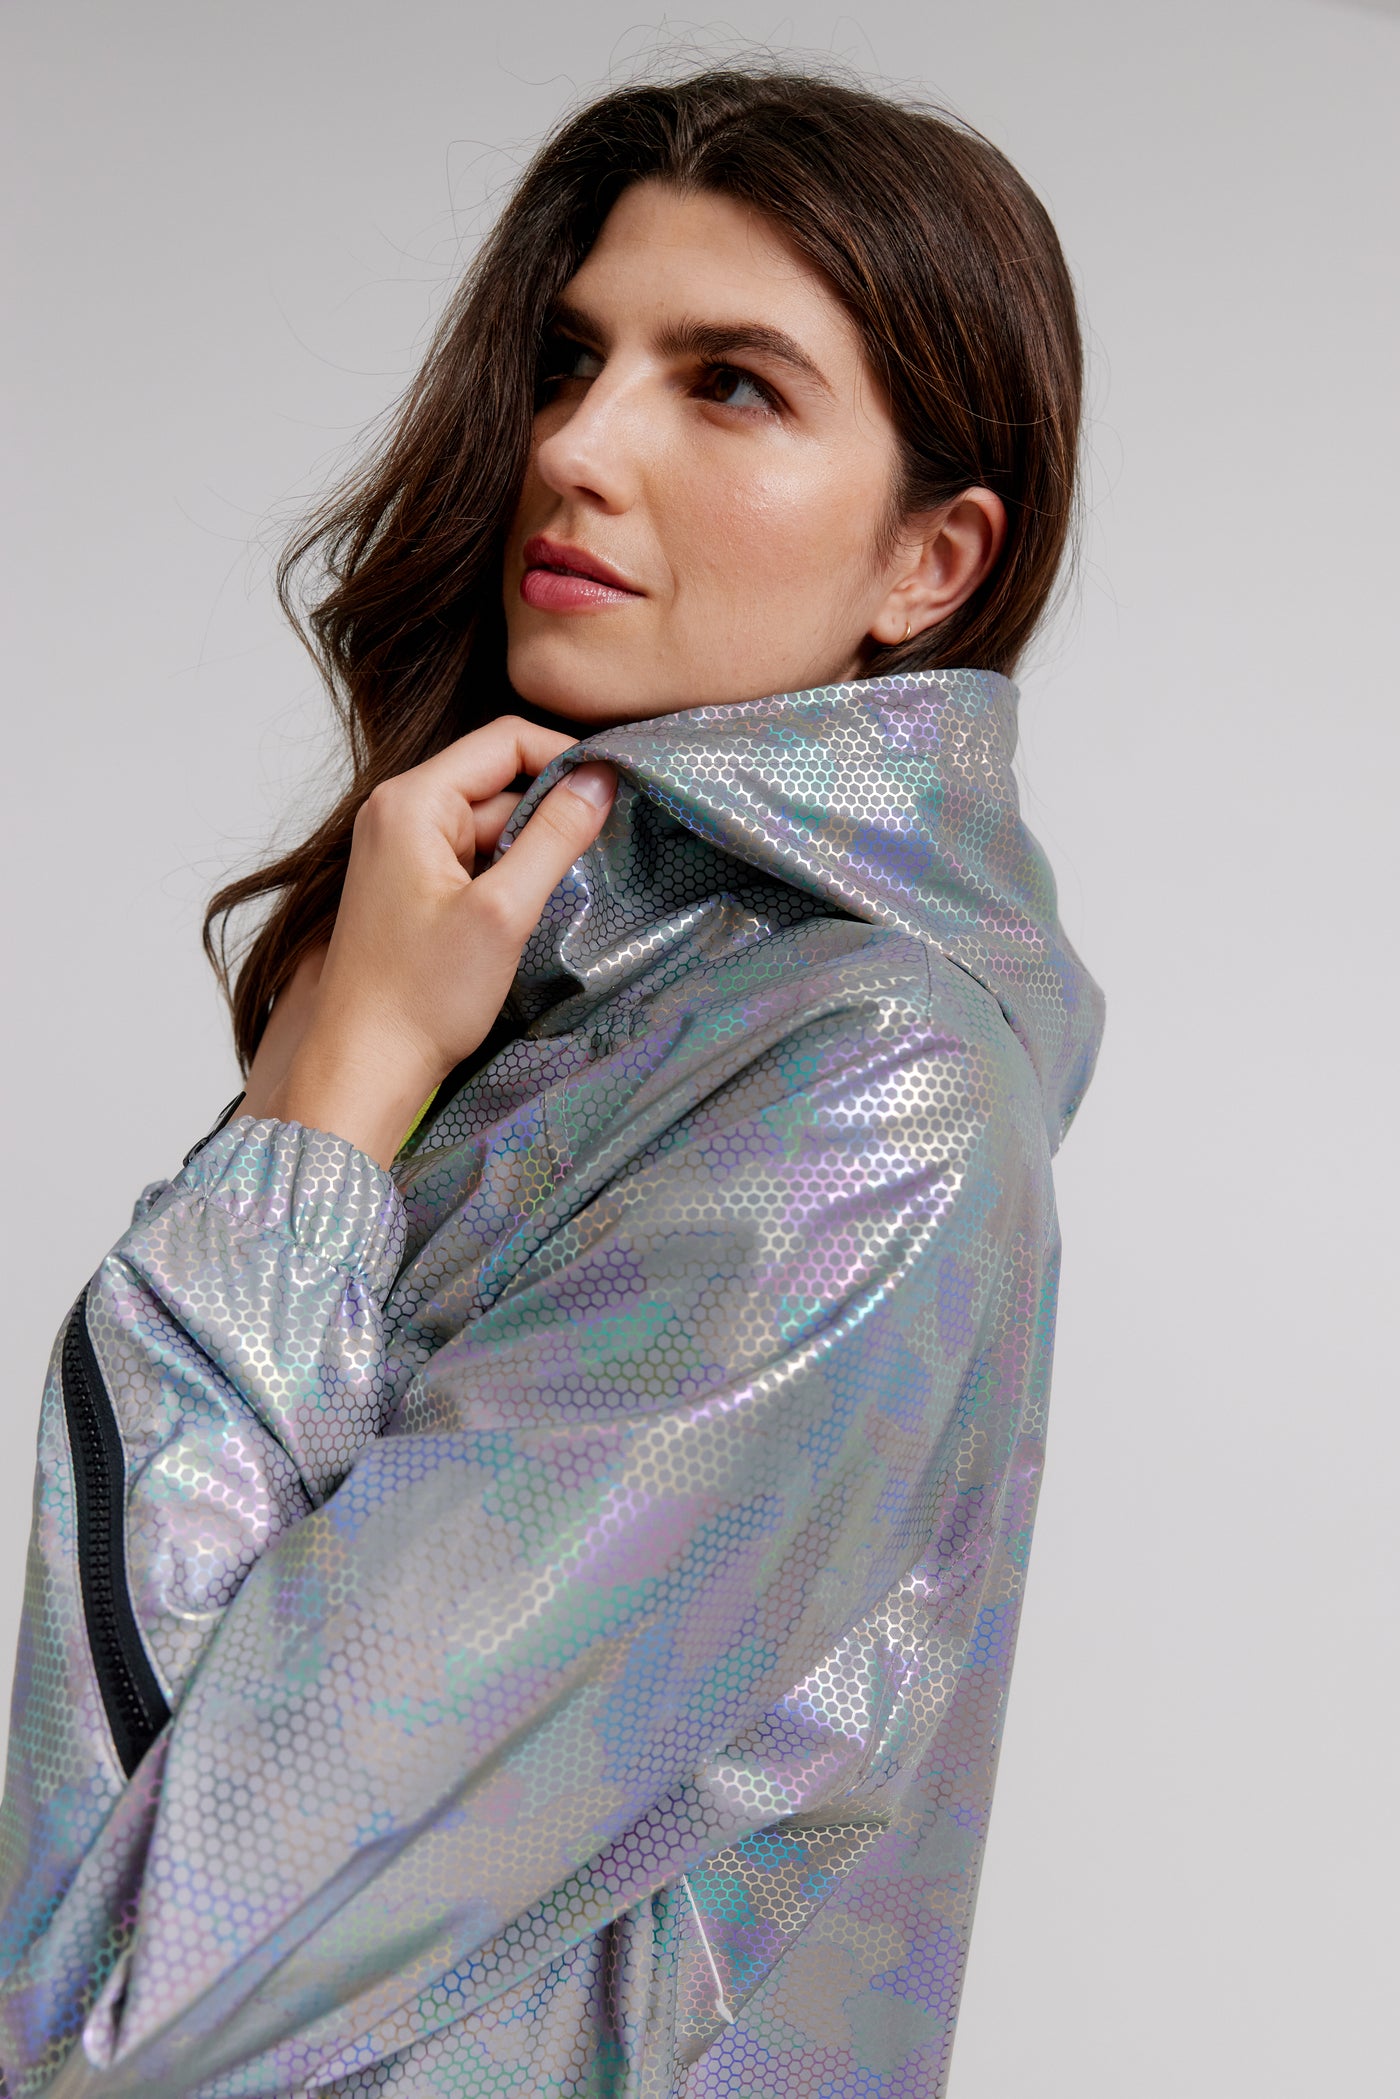 Nikki Jones Adjustable Hooded Blouson In Printed Reflective Fabric 